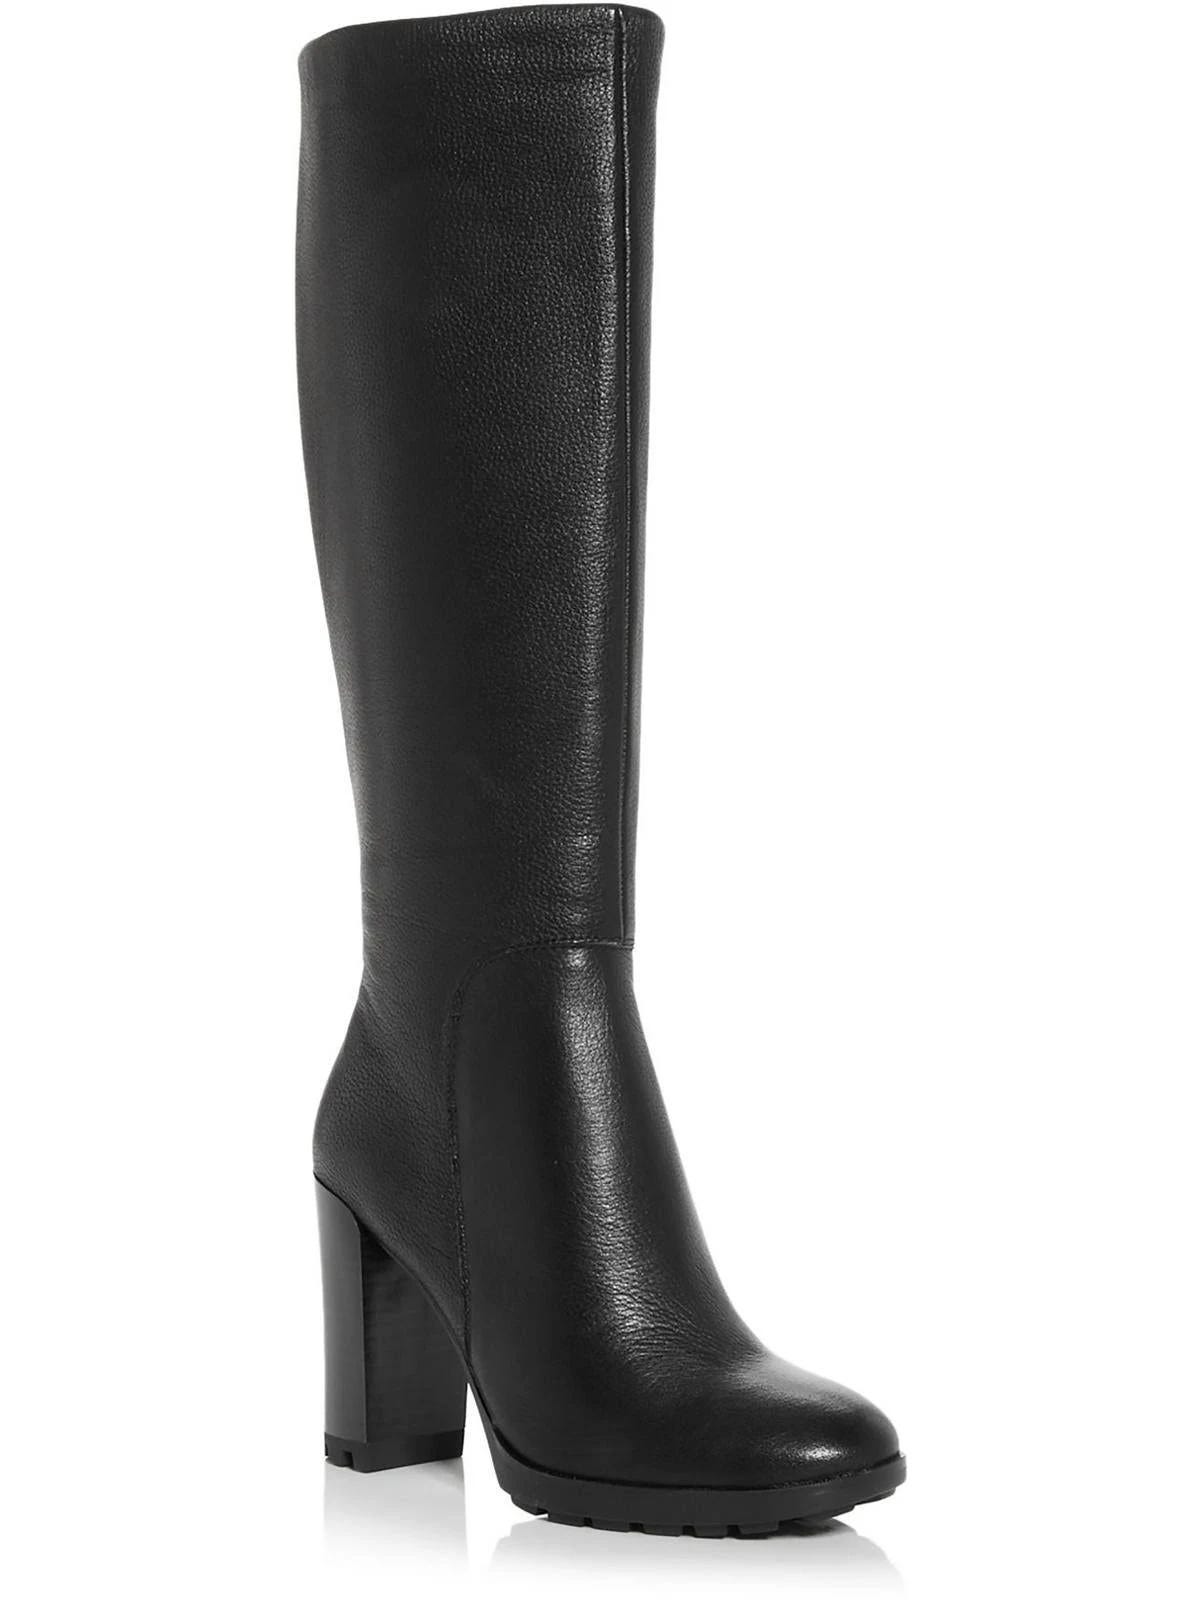 Stylish Black Knee-High Heel Boot for Women | Image